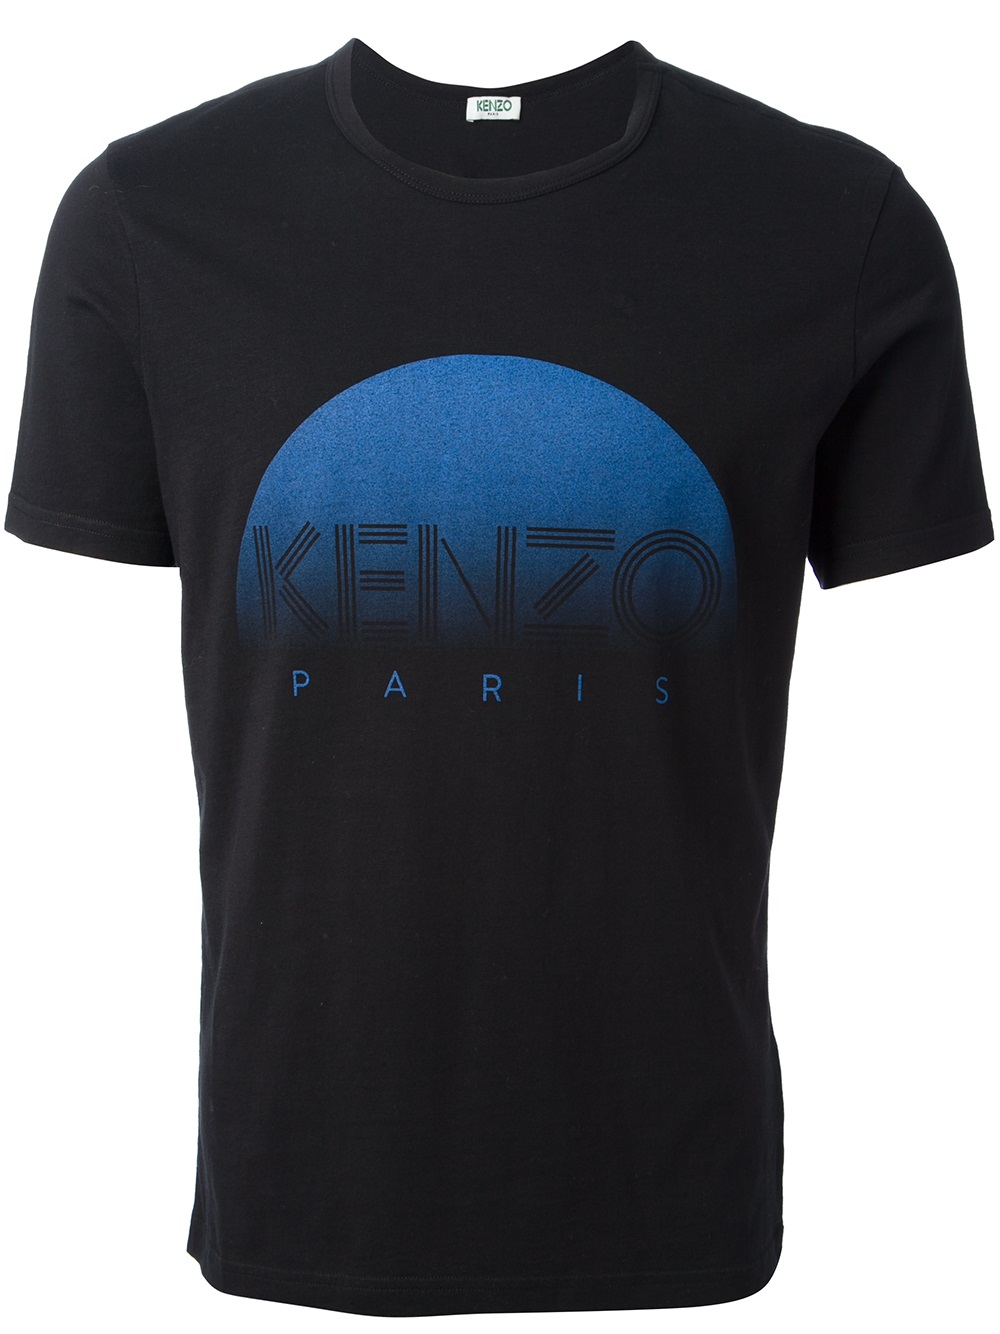 Lyst - Kenzo Brand Print Tshirt in Black for Men